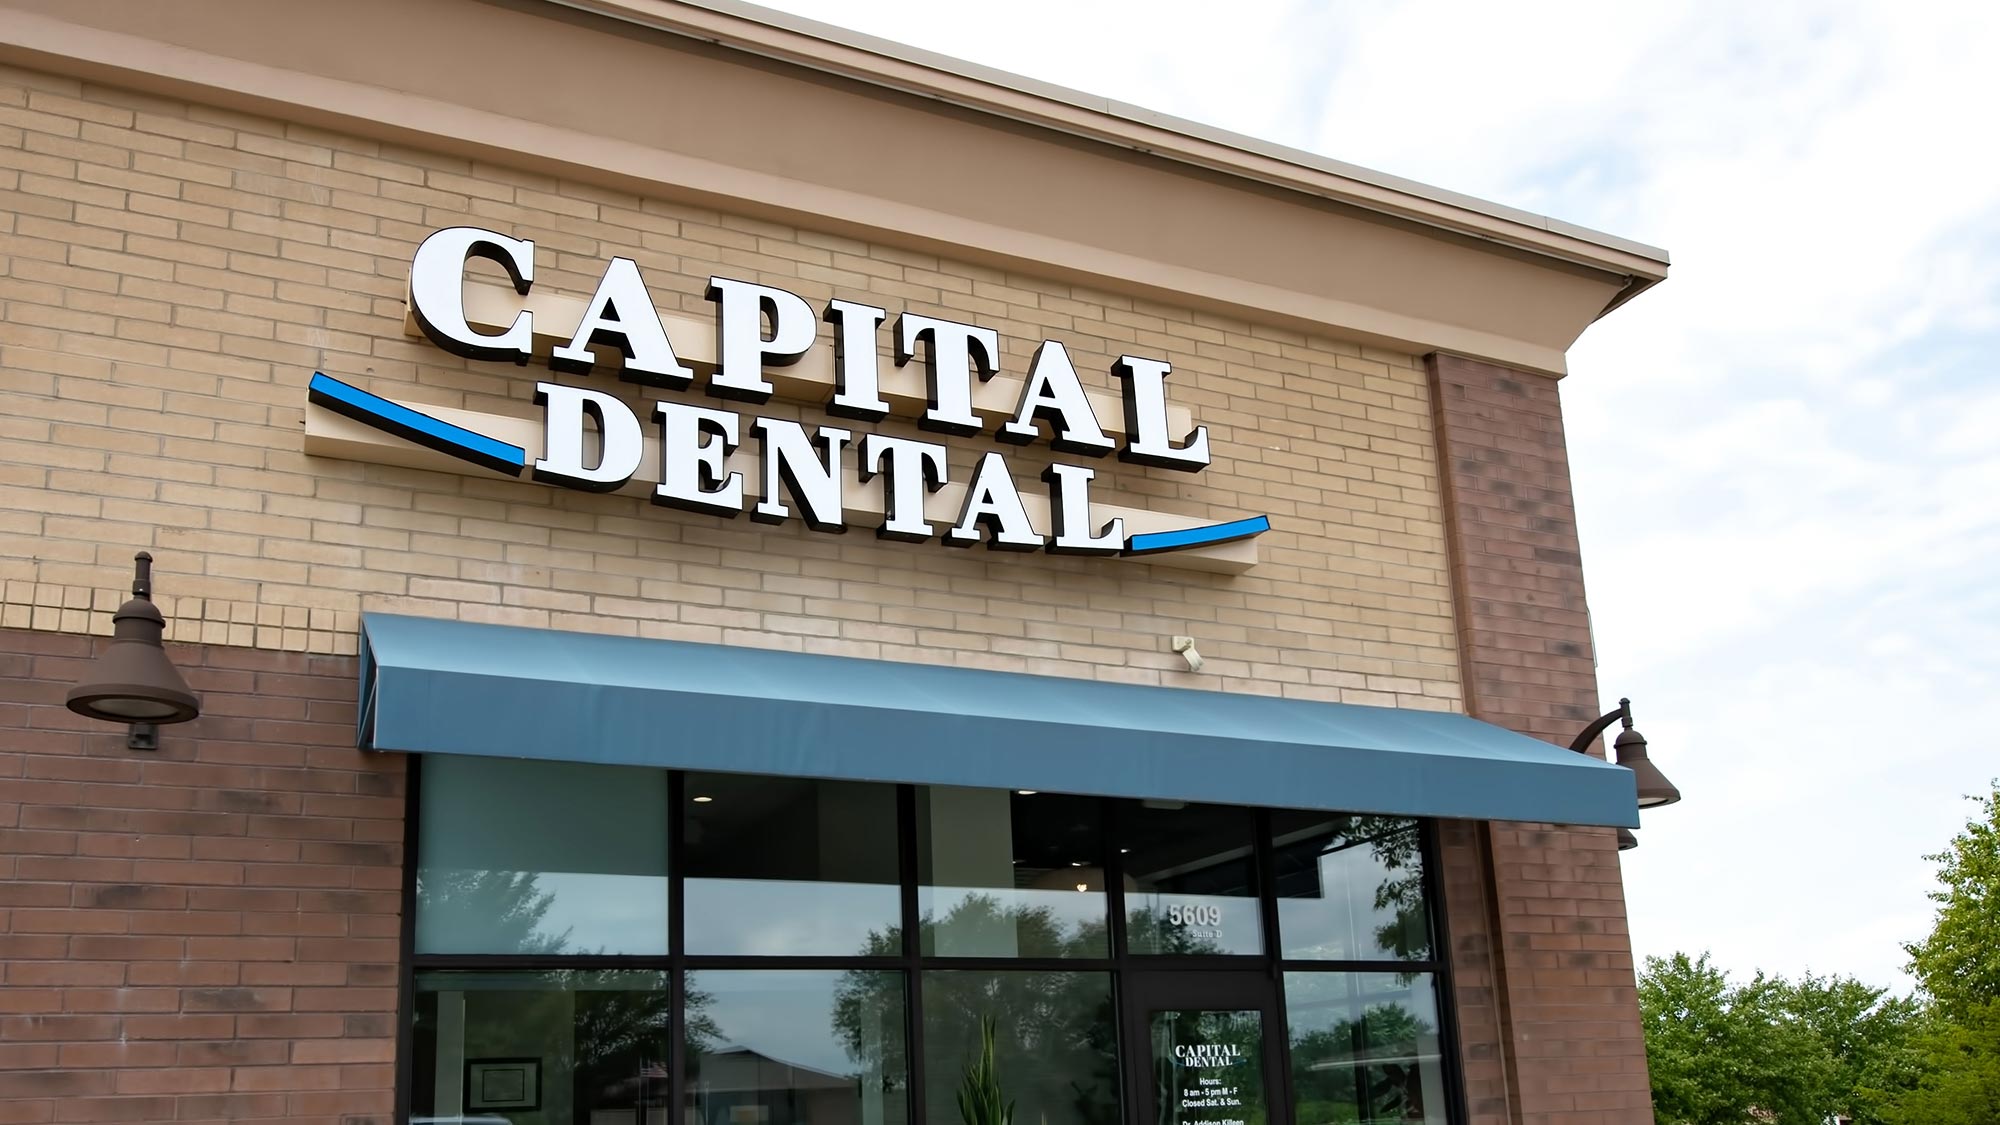 Exterior of the Capital Dental office in Lincoln, Nebraska